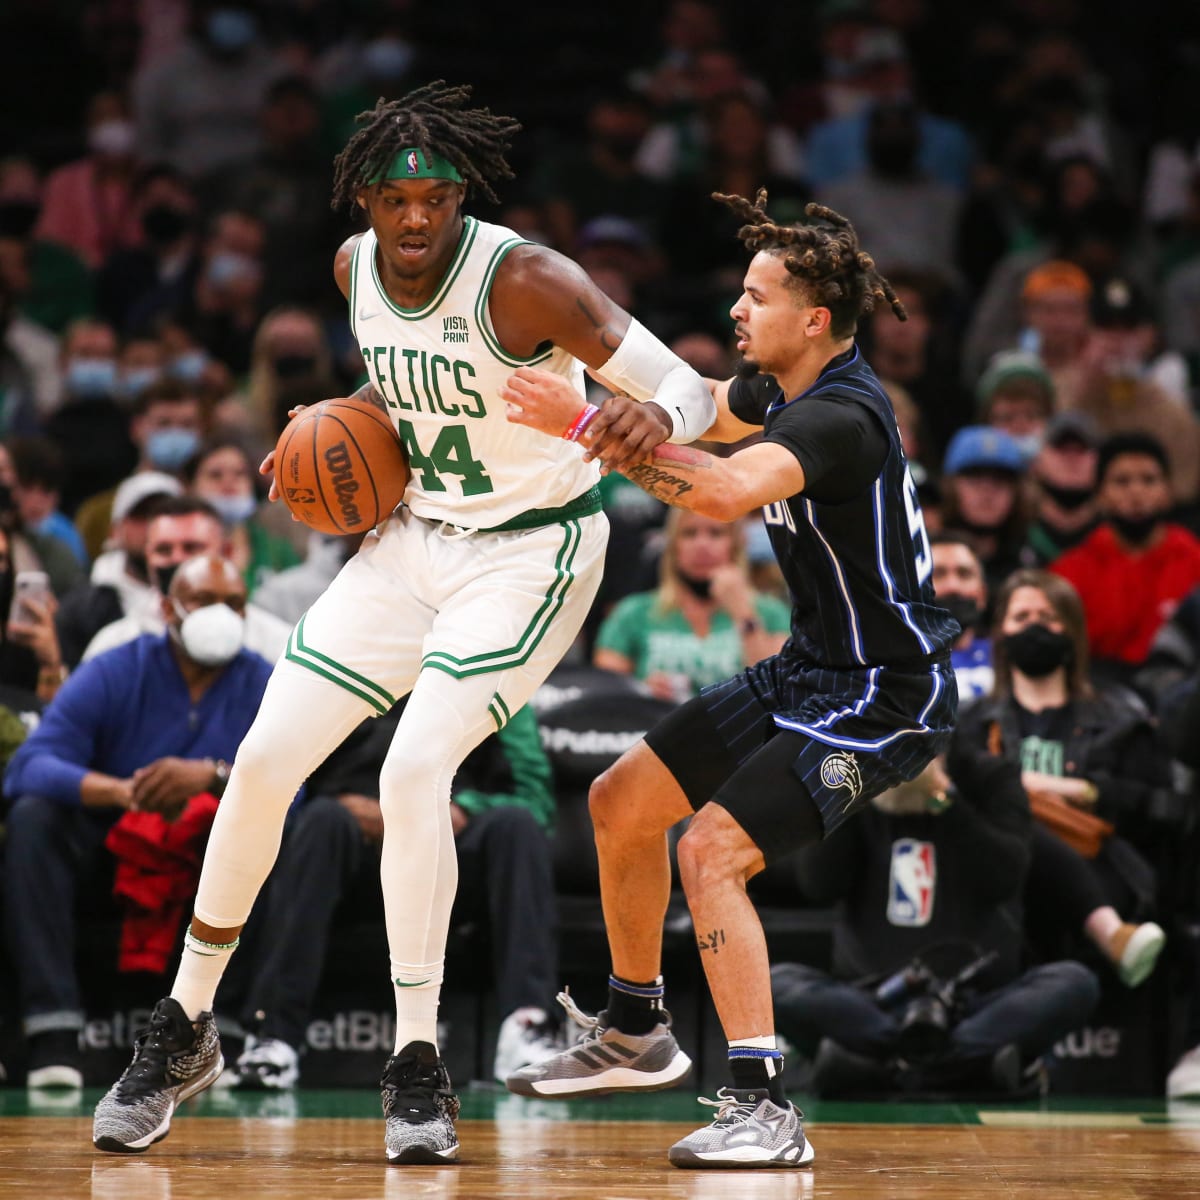 Return seems imminent for Celtics' Robert Williams - The Boston Globe